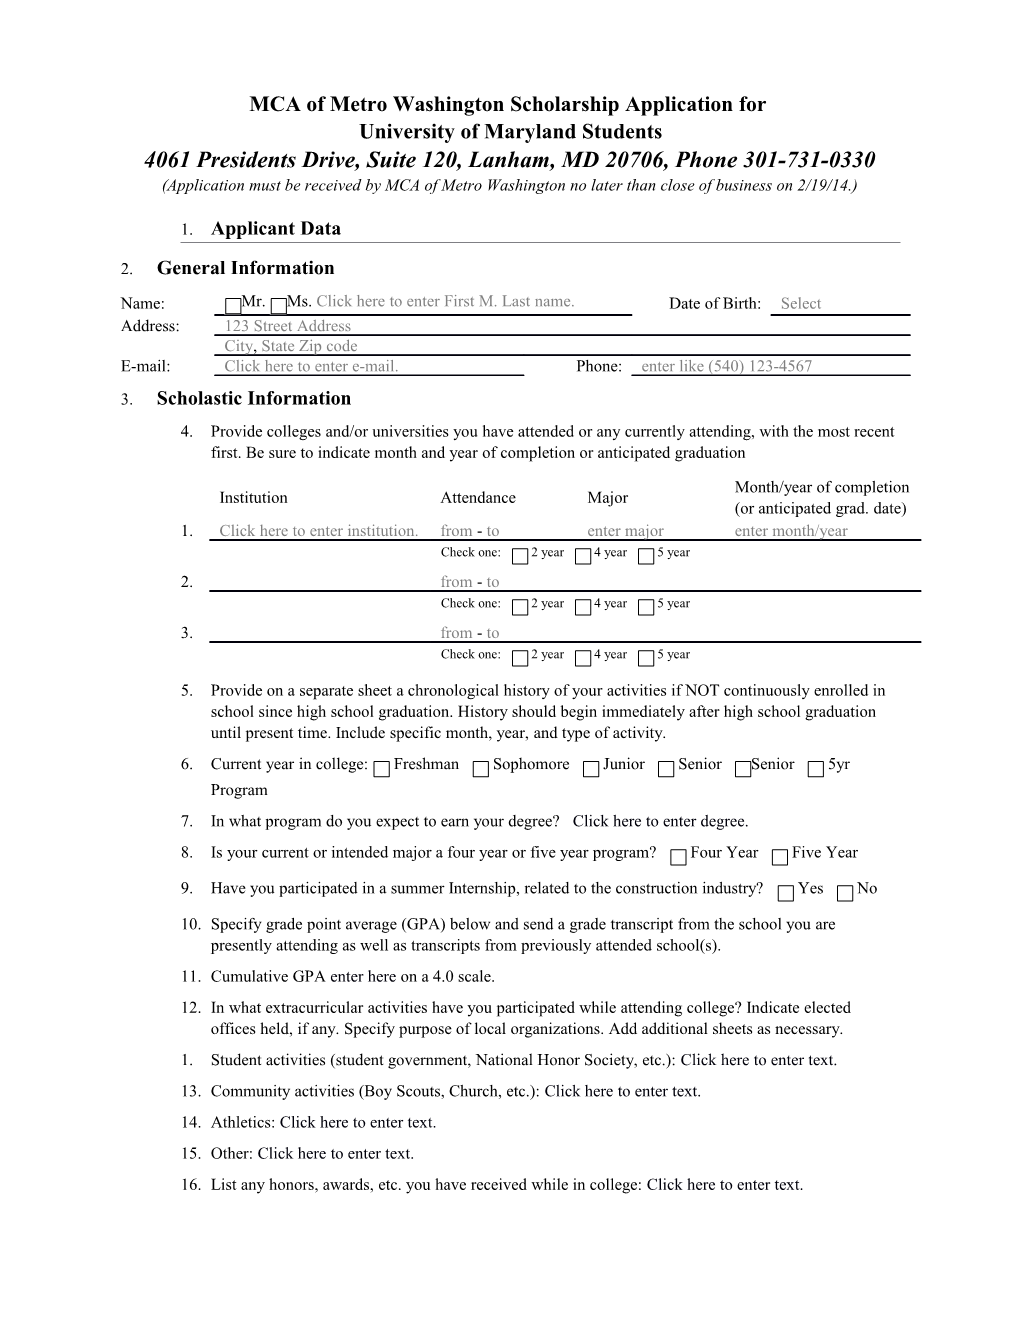 MCA of Metro Washington Scholarship Application For